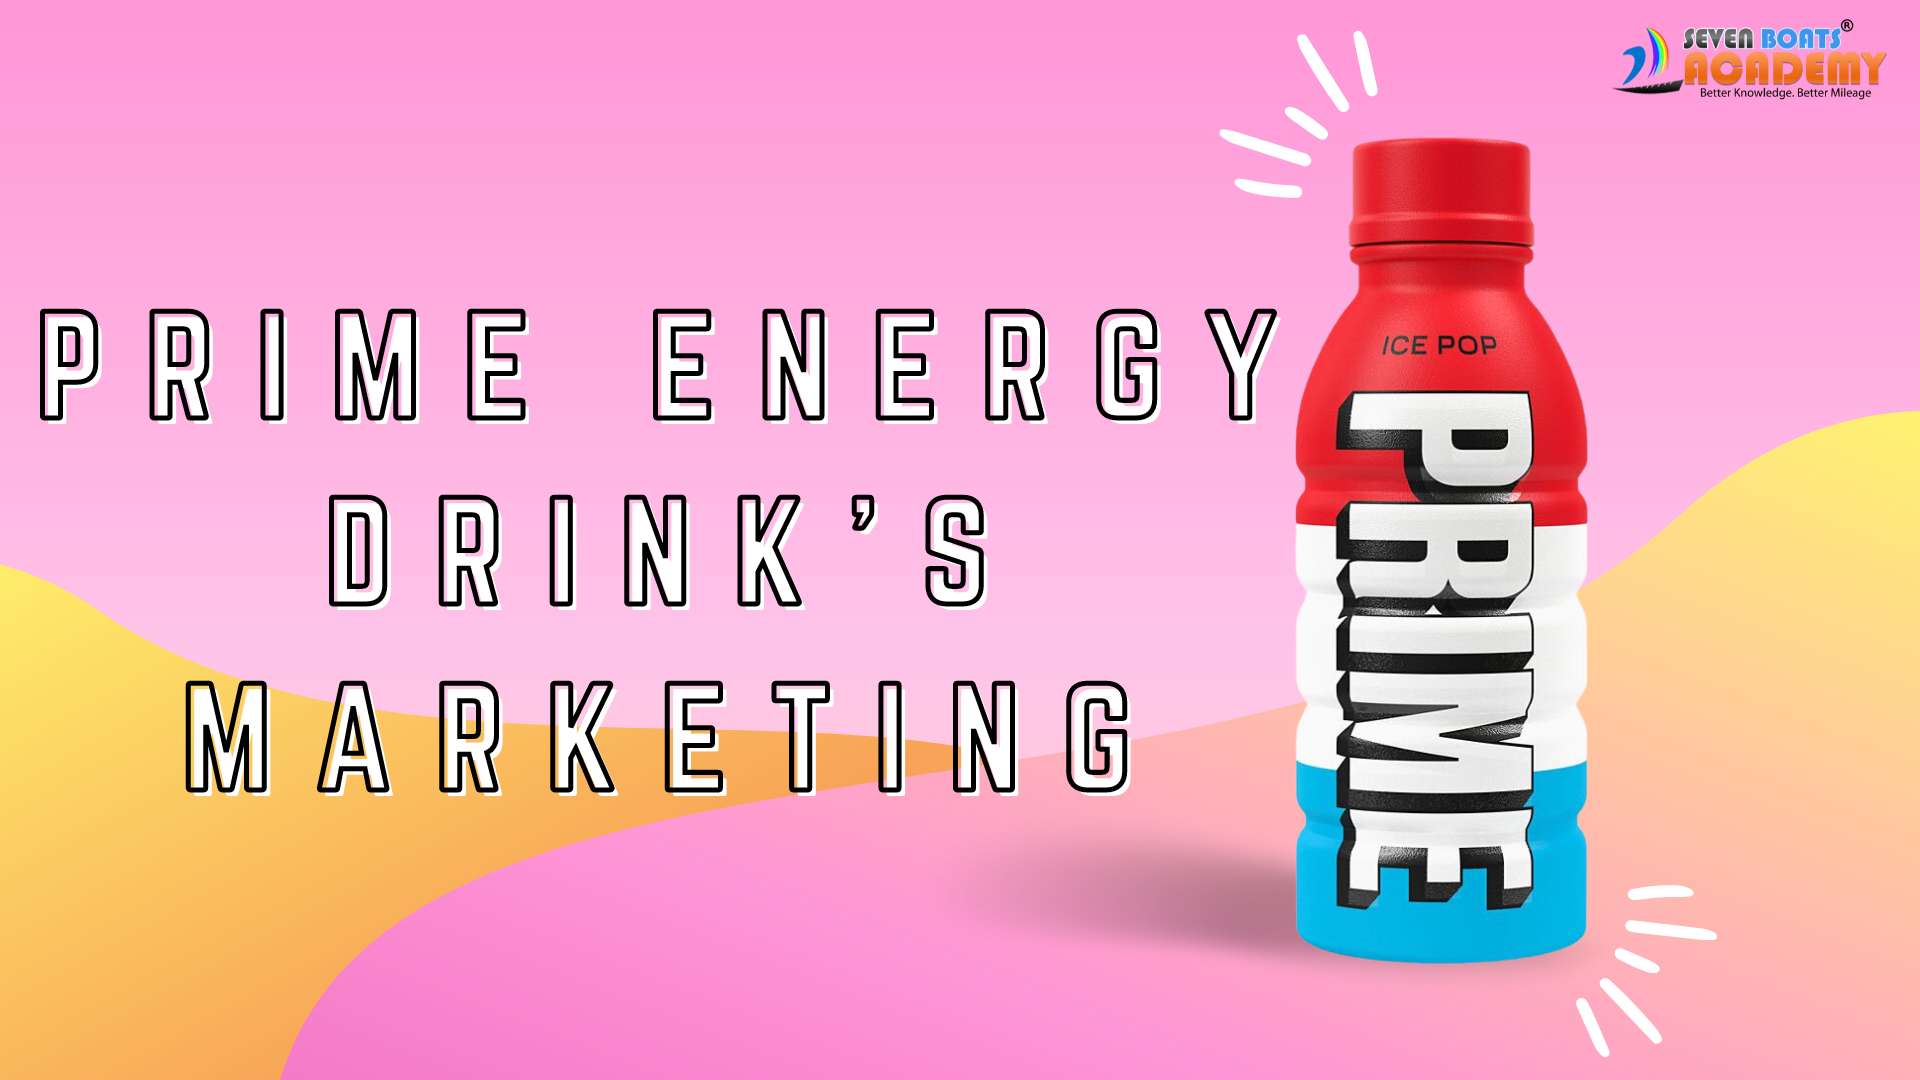 Prime Energy Drink’s Marketing